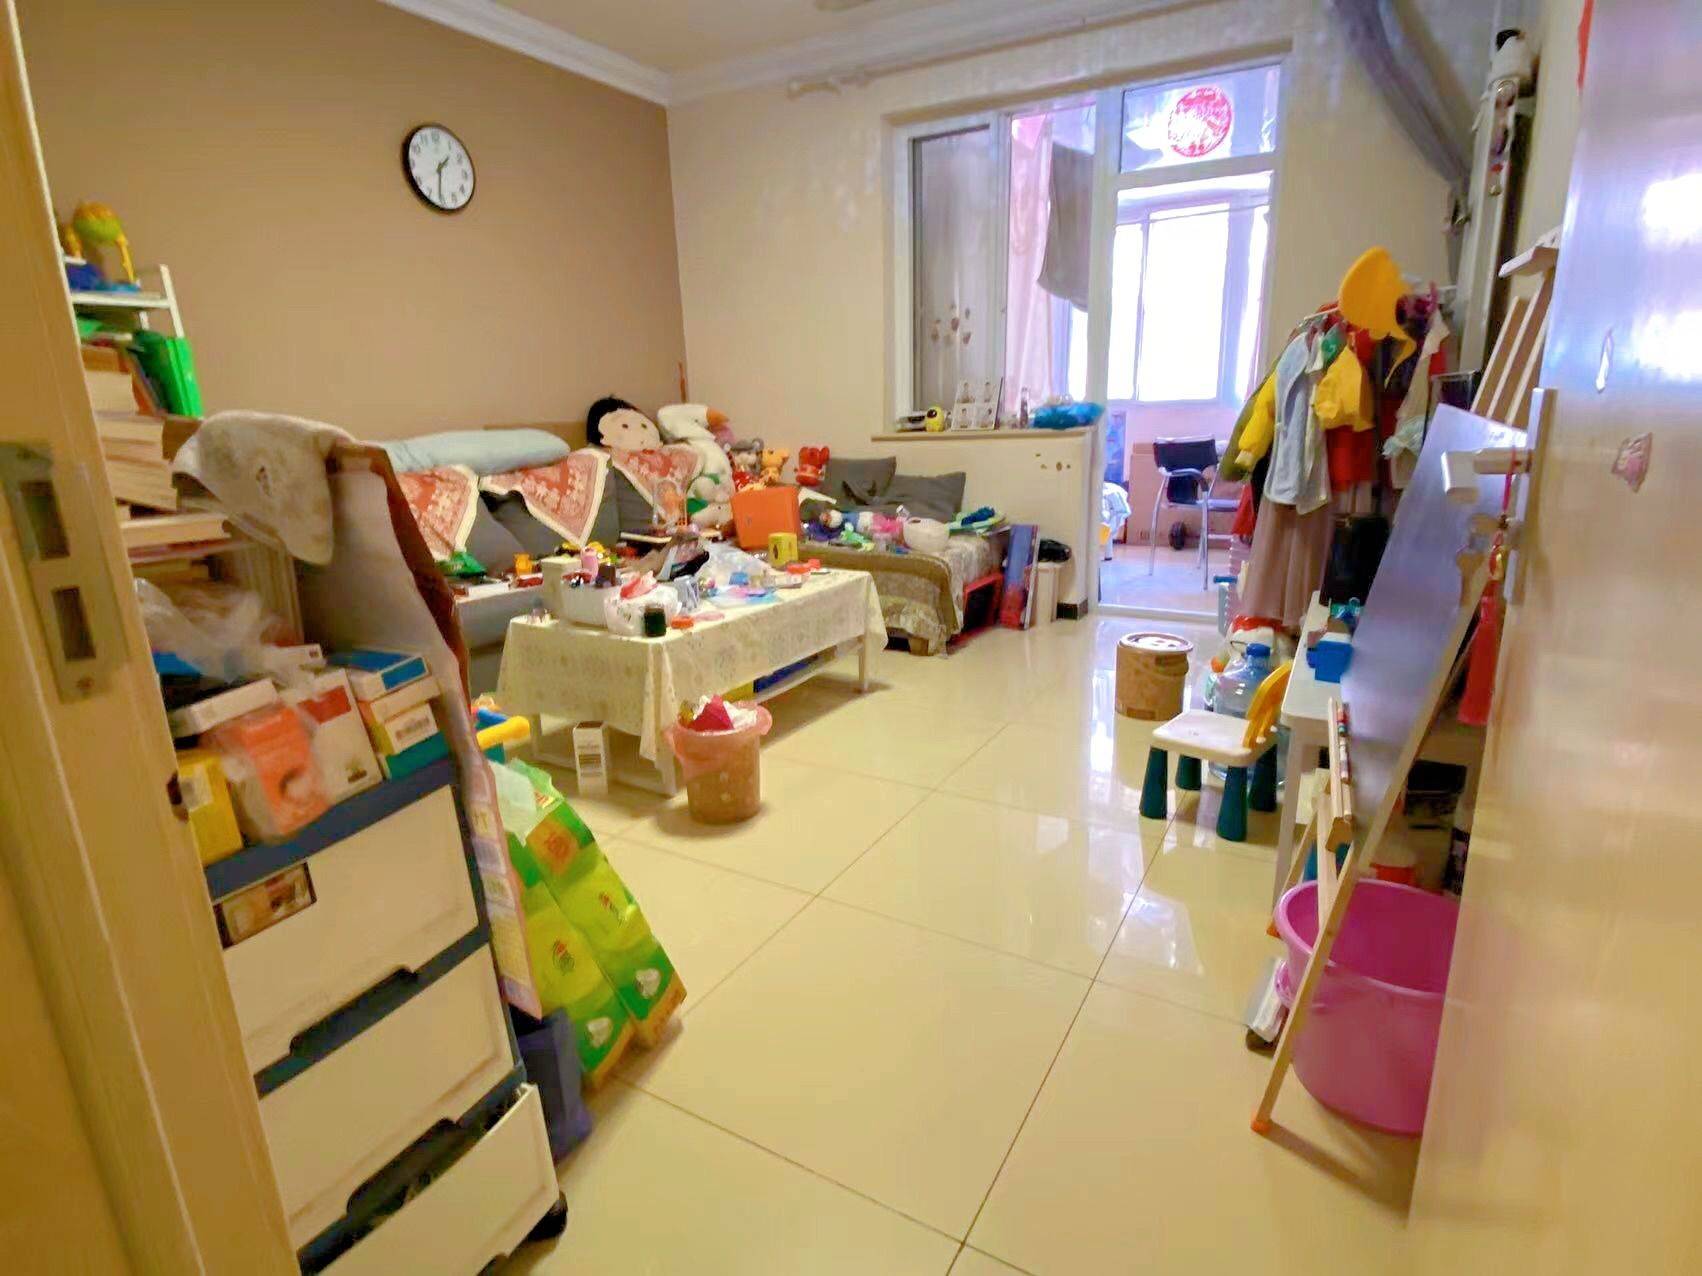 Beijing-Shijingshan-Cozy Home,Clean&Comfy,No Gender Limit,Hustle & Bustle,“Friends”,Chilled